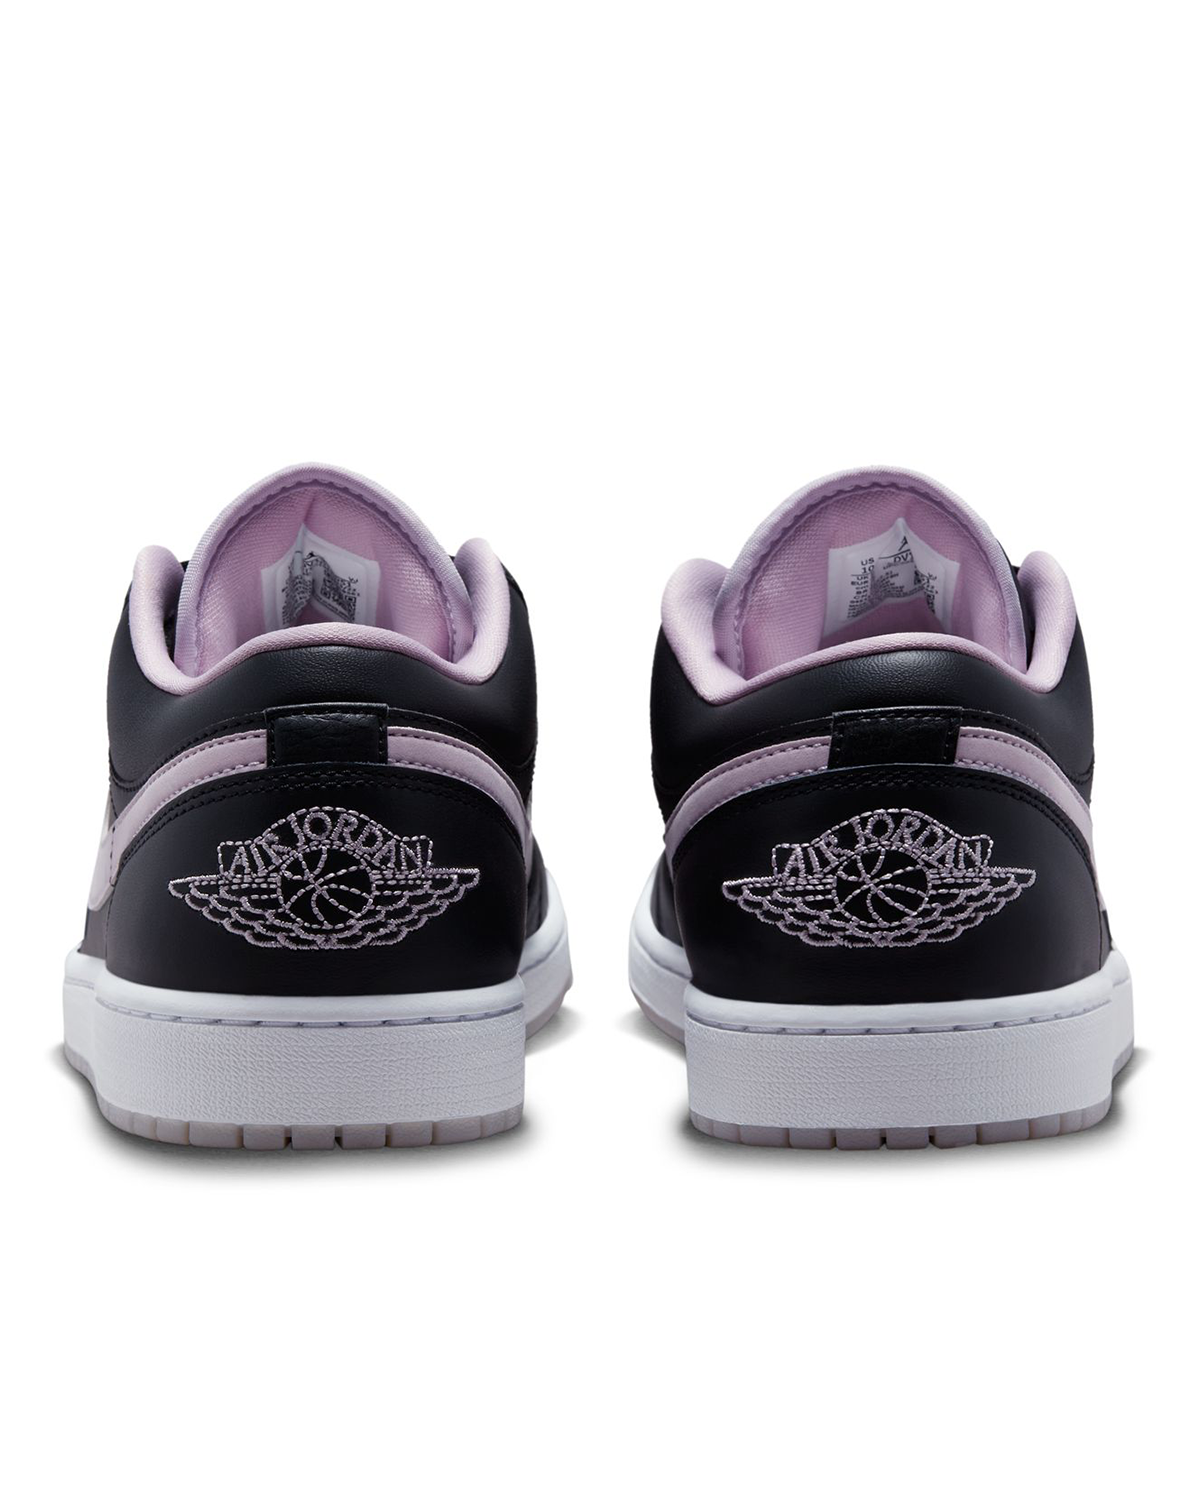 Air Jordan 1 Low Black/Iced Lilac